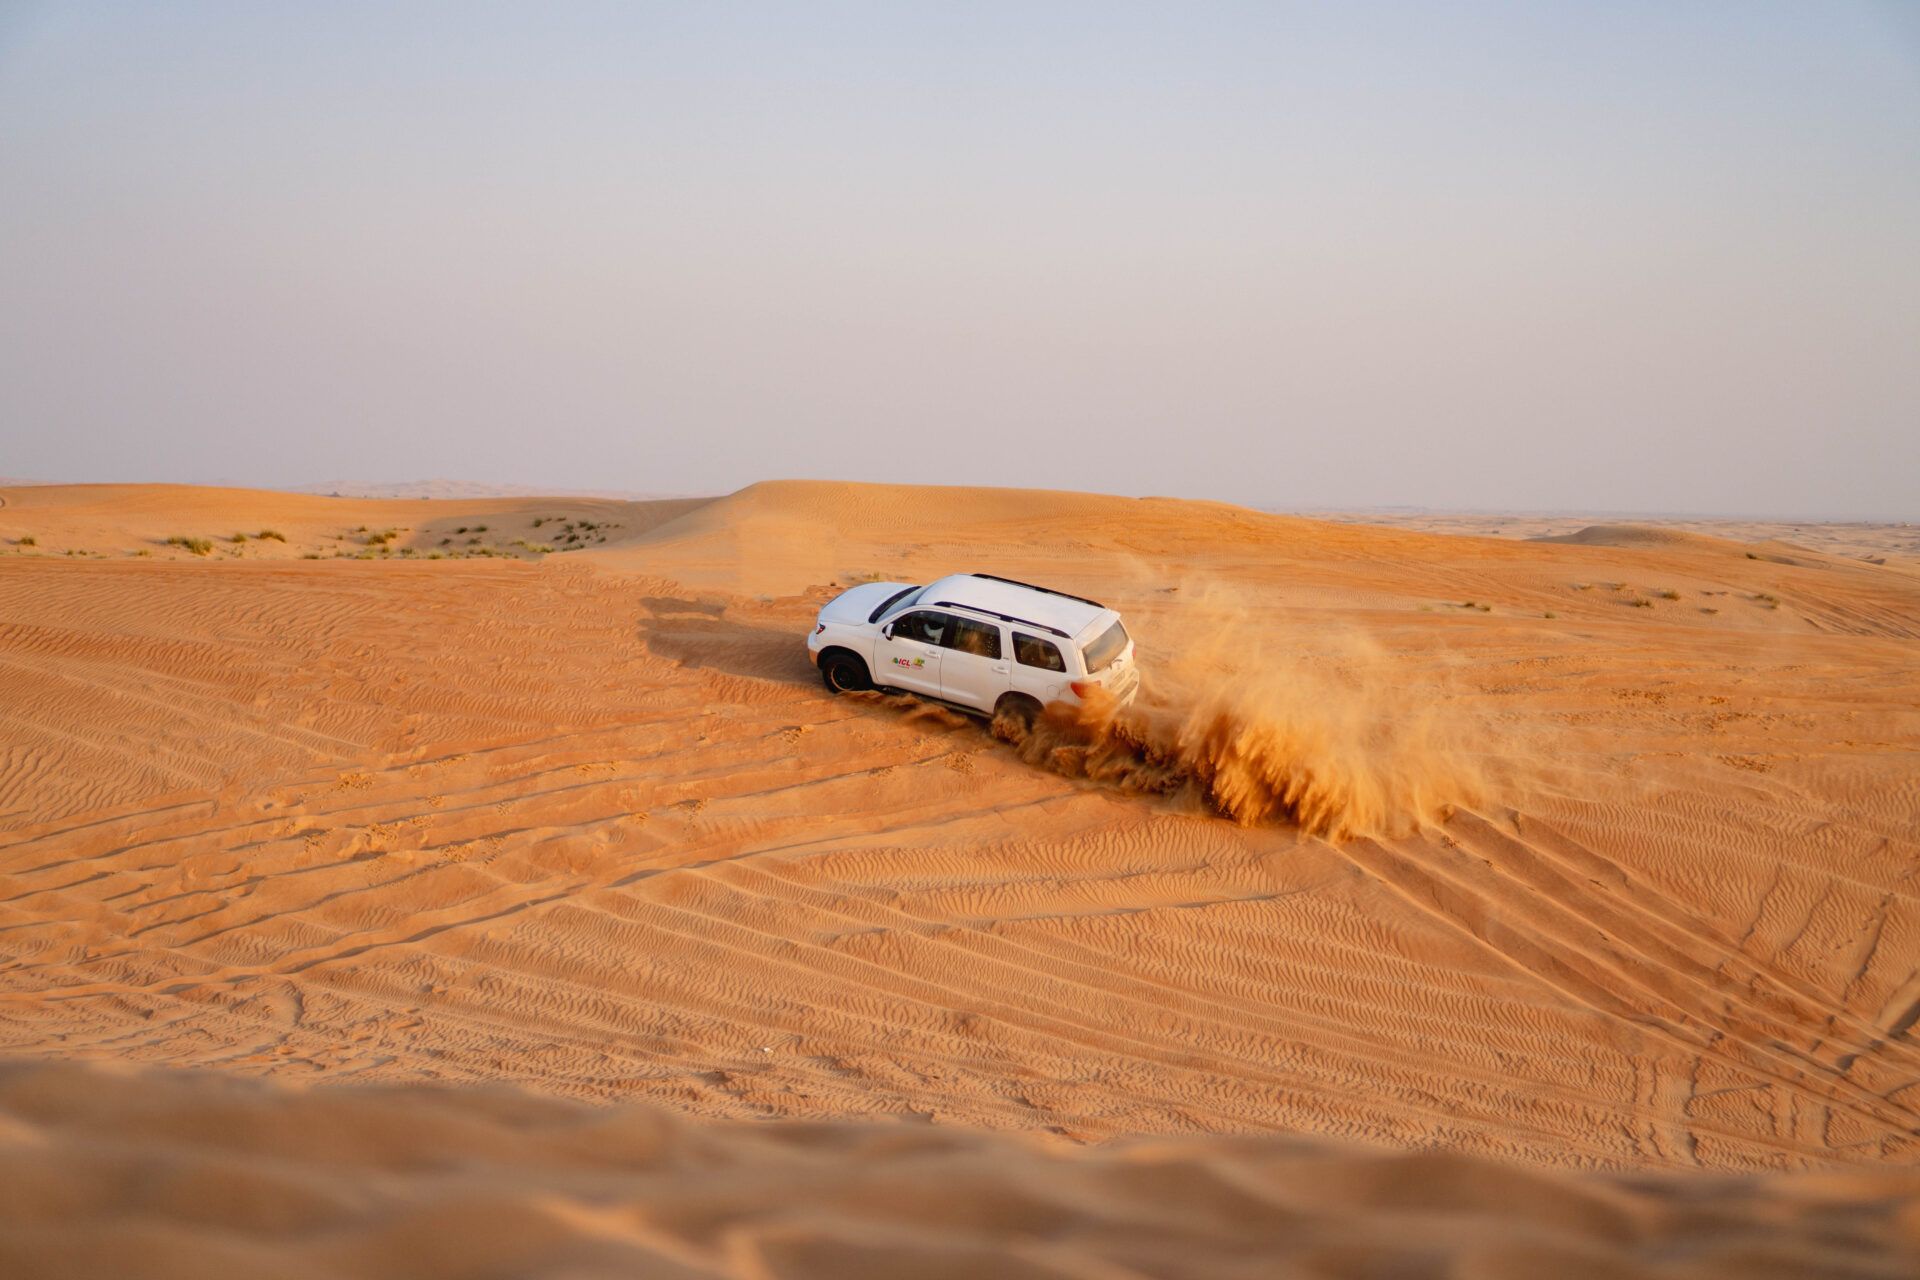 Dune bashing in a 4×4 vehicle